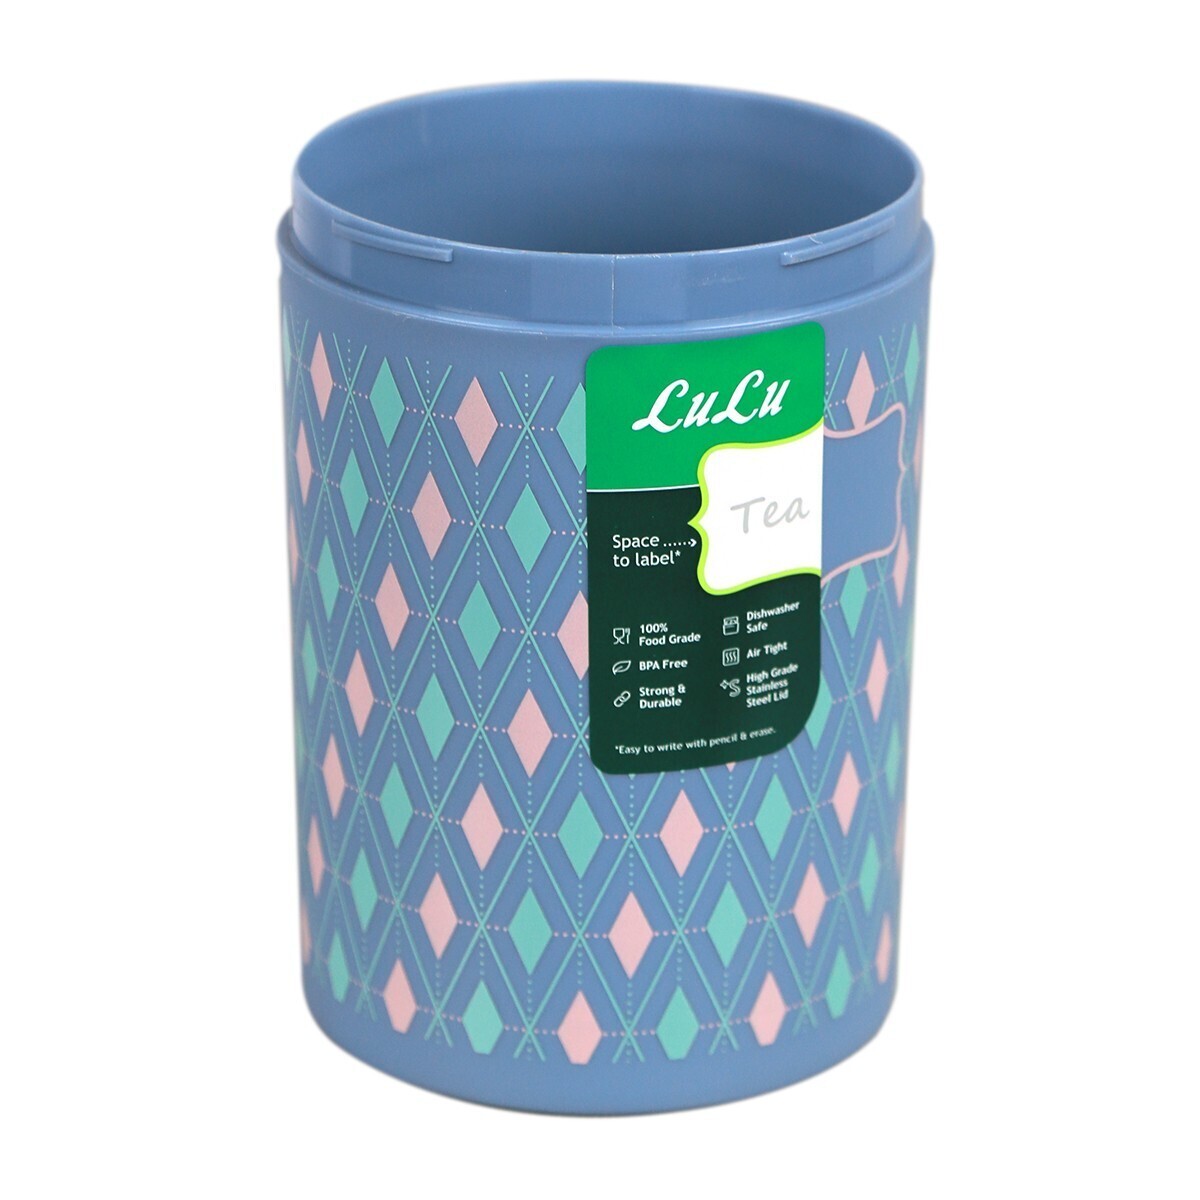 Lulu Decorative Jar 750ml